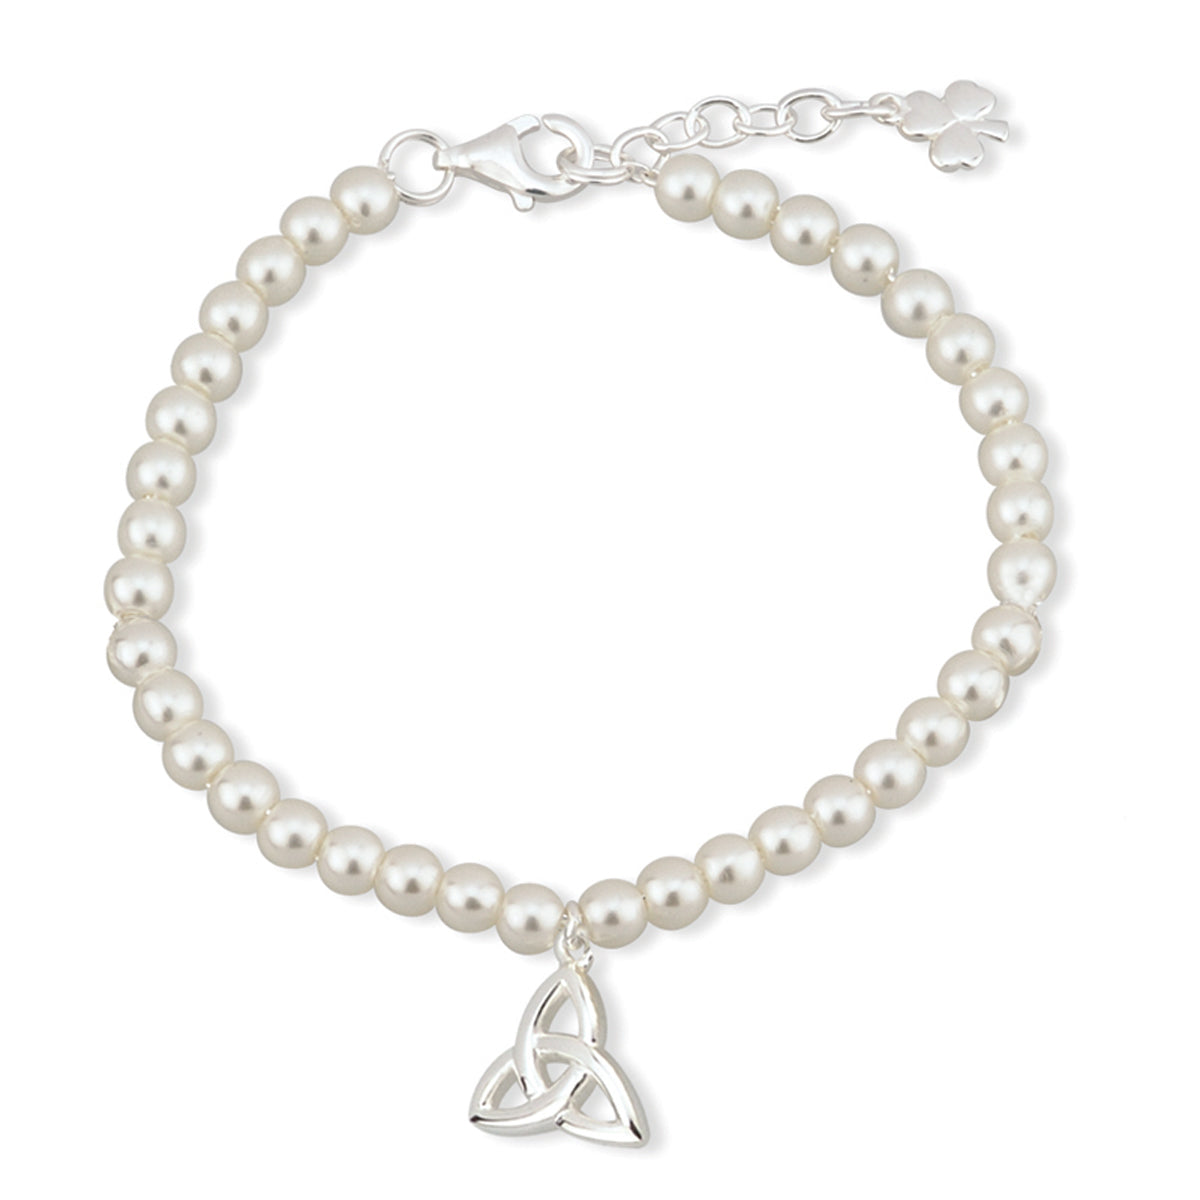 rhodium plated pearl trinity knot communion bracelet s5675 from Solvar